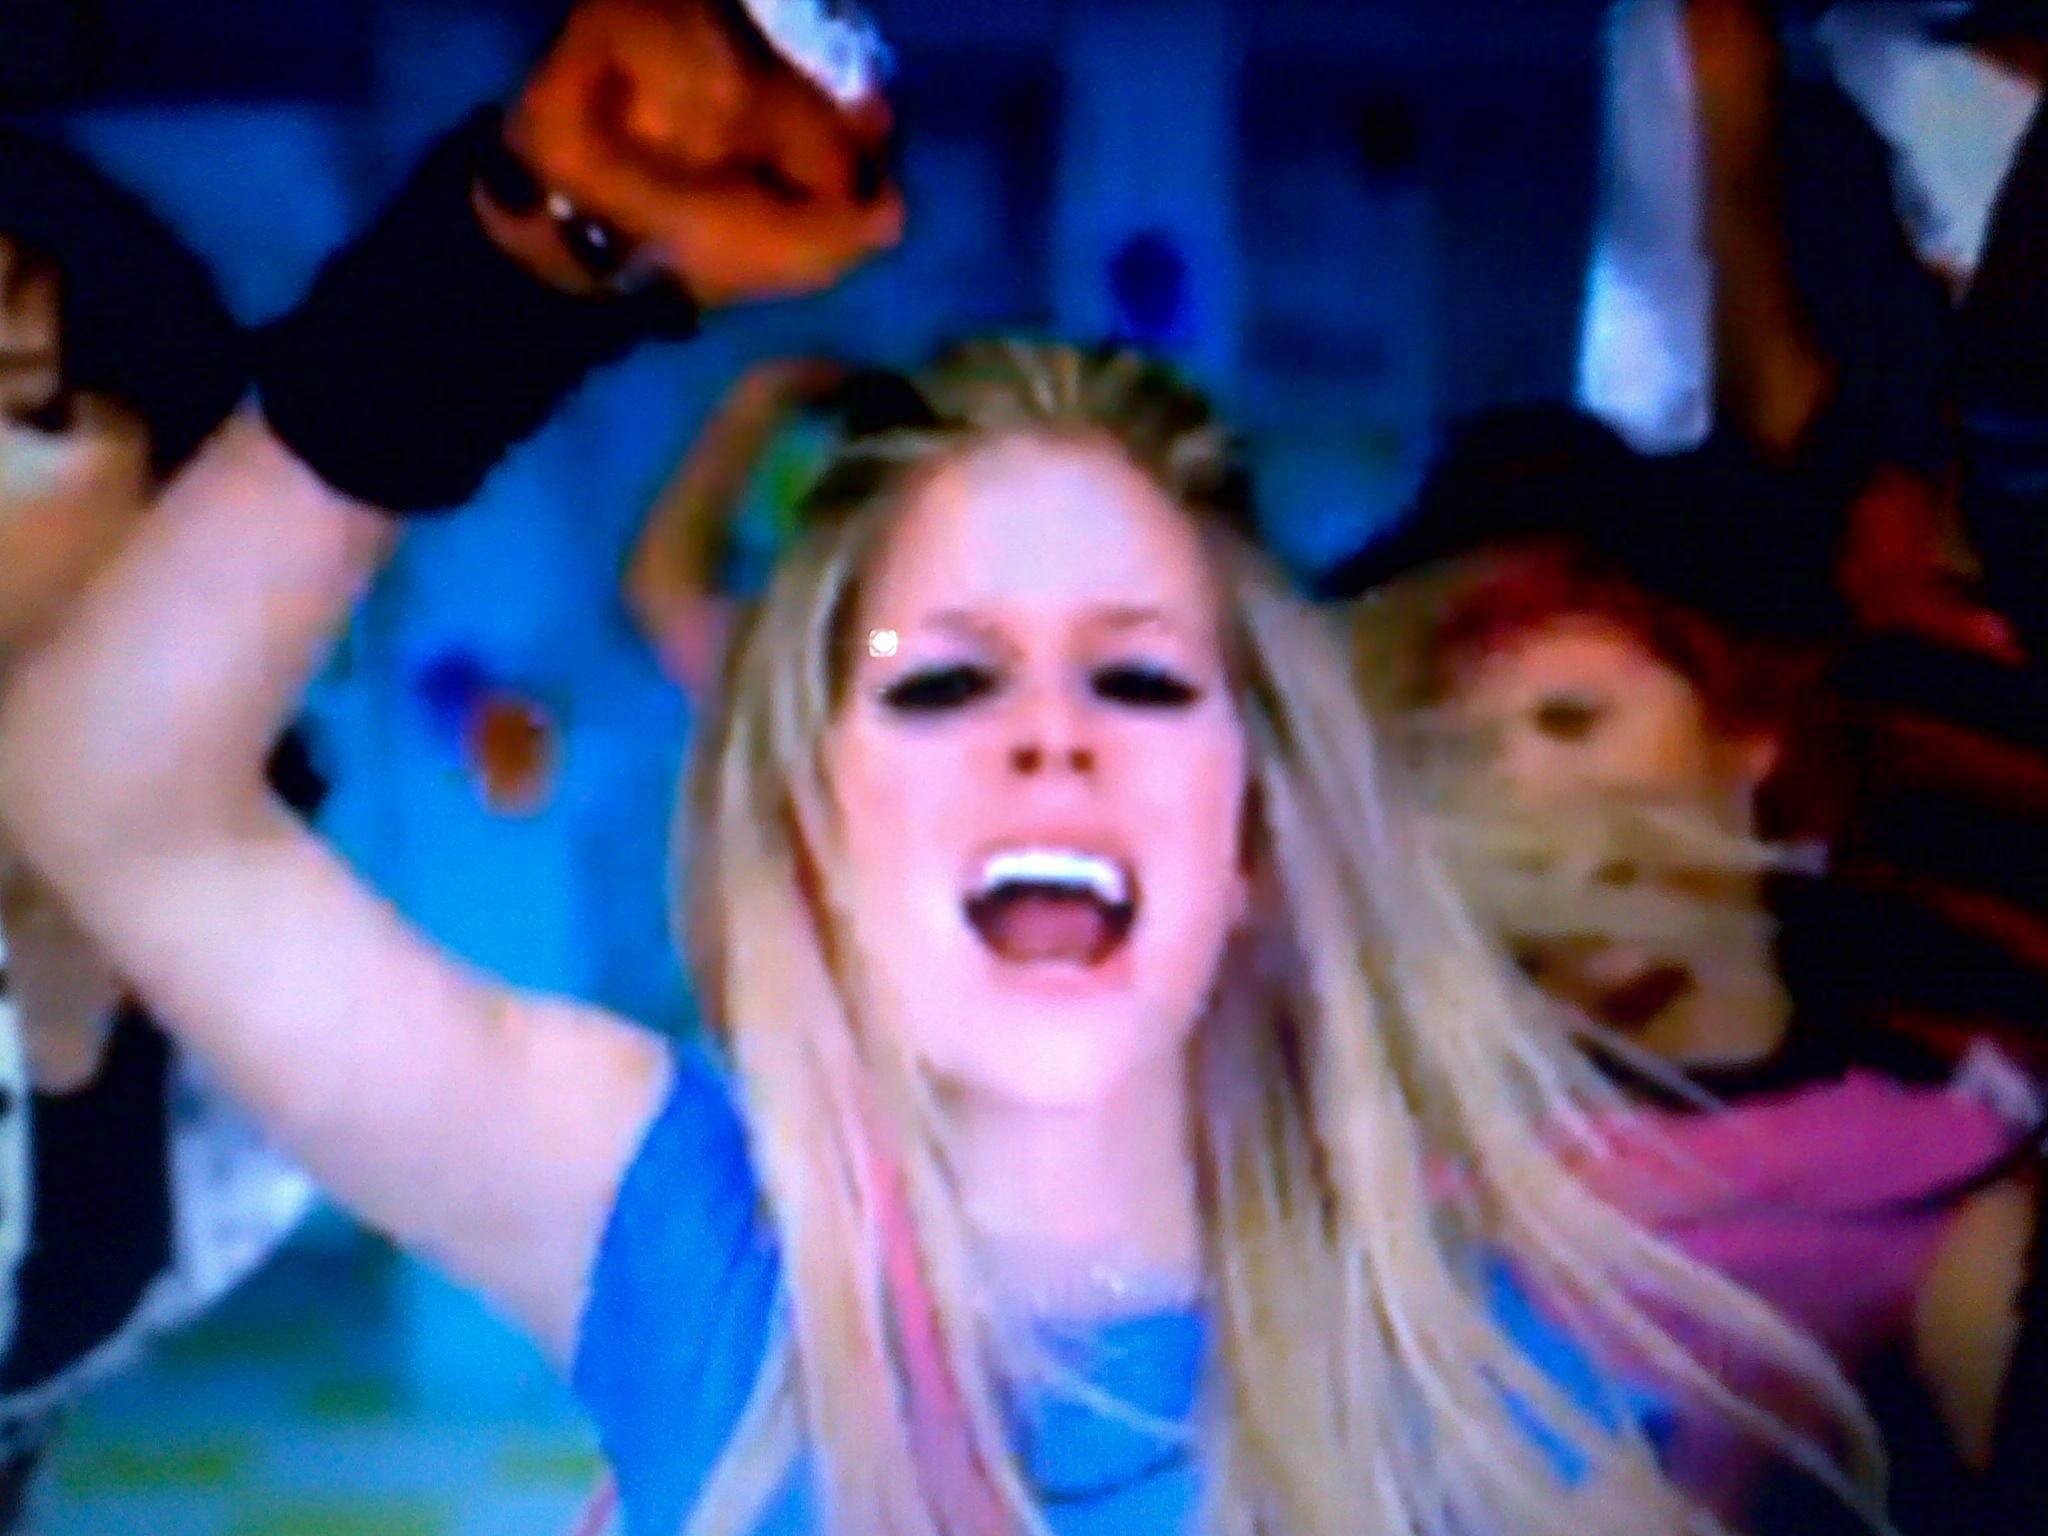 Music video - Girlfriend - Avril Lavigne Image (16184532) - Fanpop